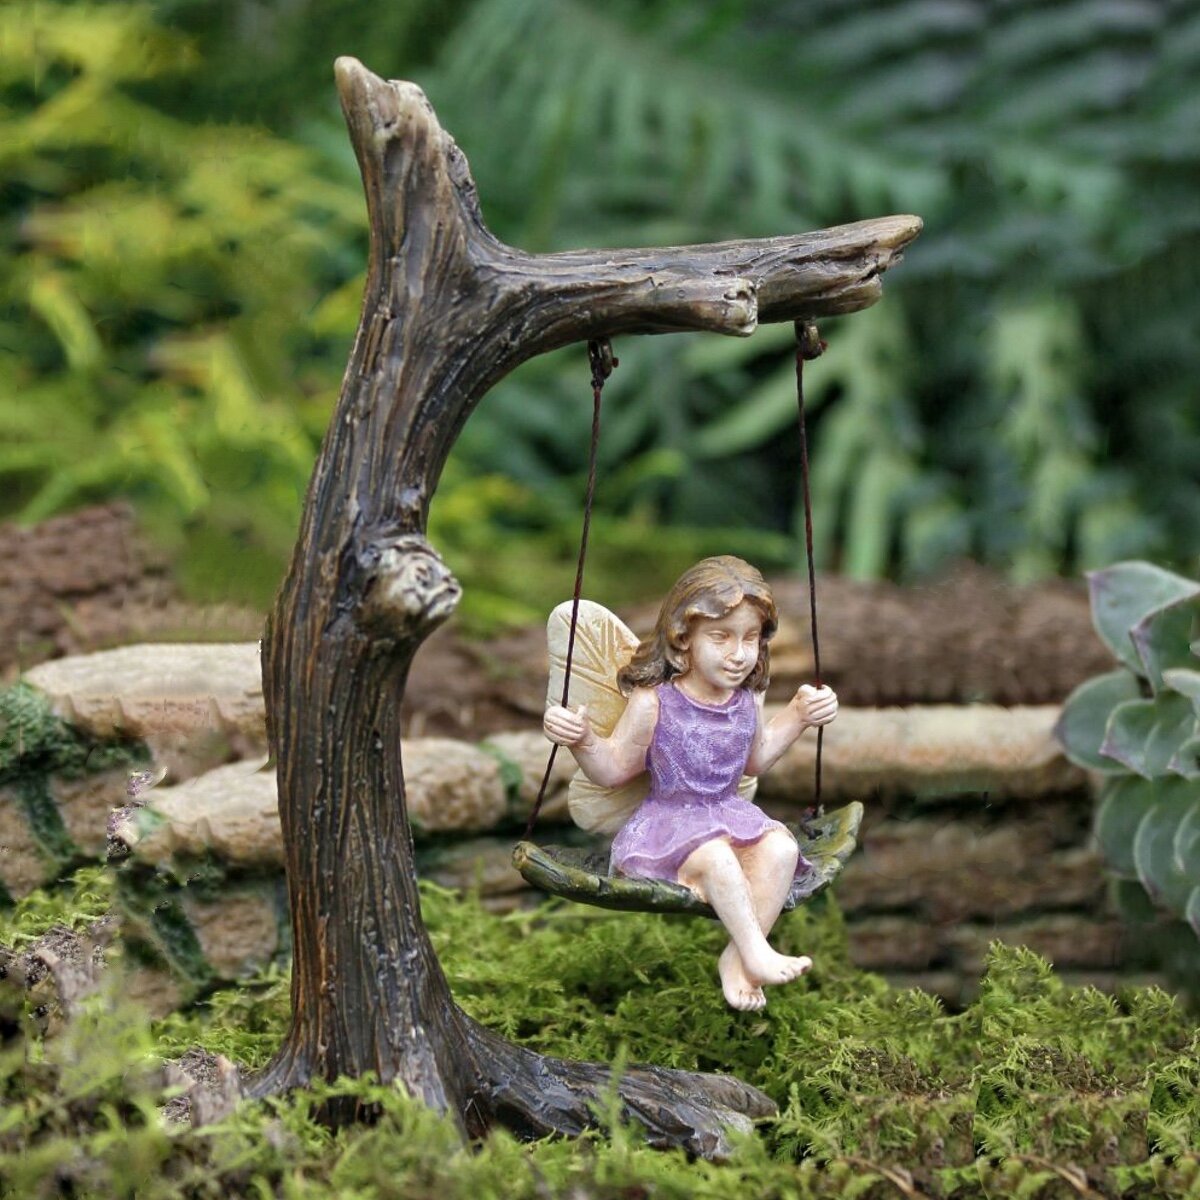 Miniature Dollhouse FAIRY GARDEN ~ Mini Brown Resin Large Stone Path Walkway 